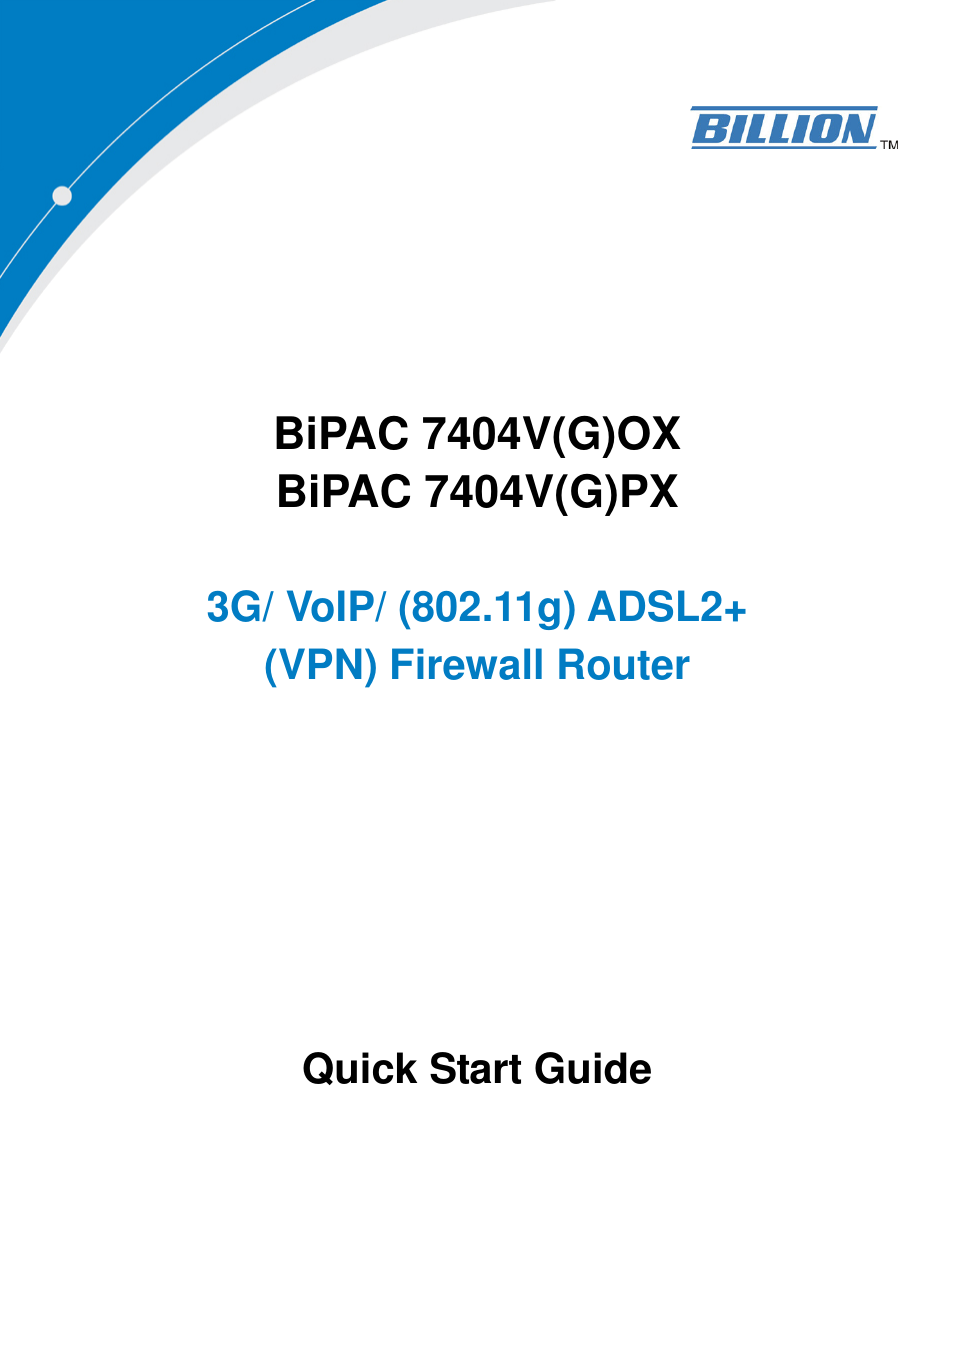 BiPAC 7404V(G)PX